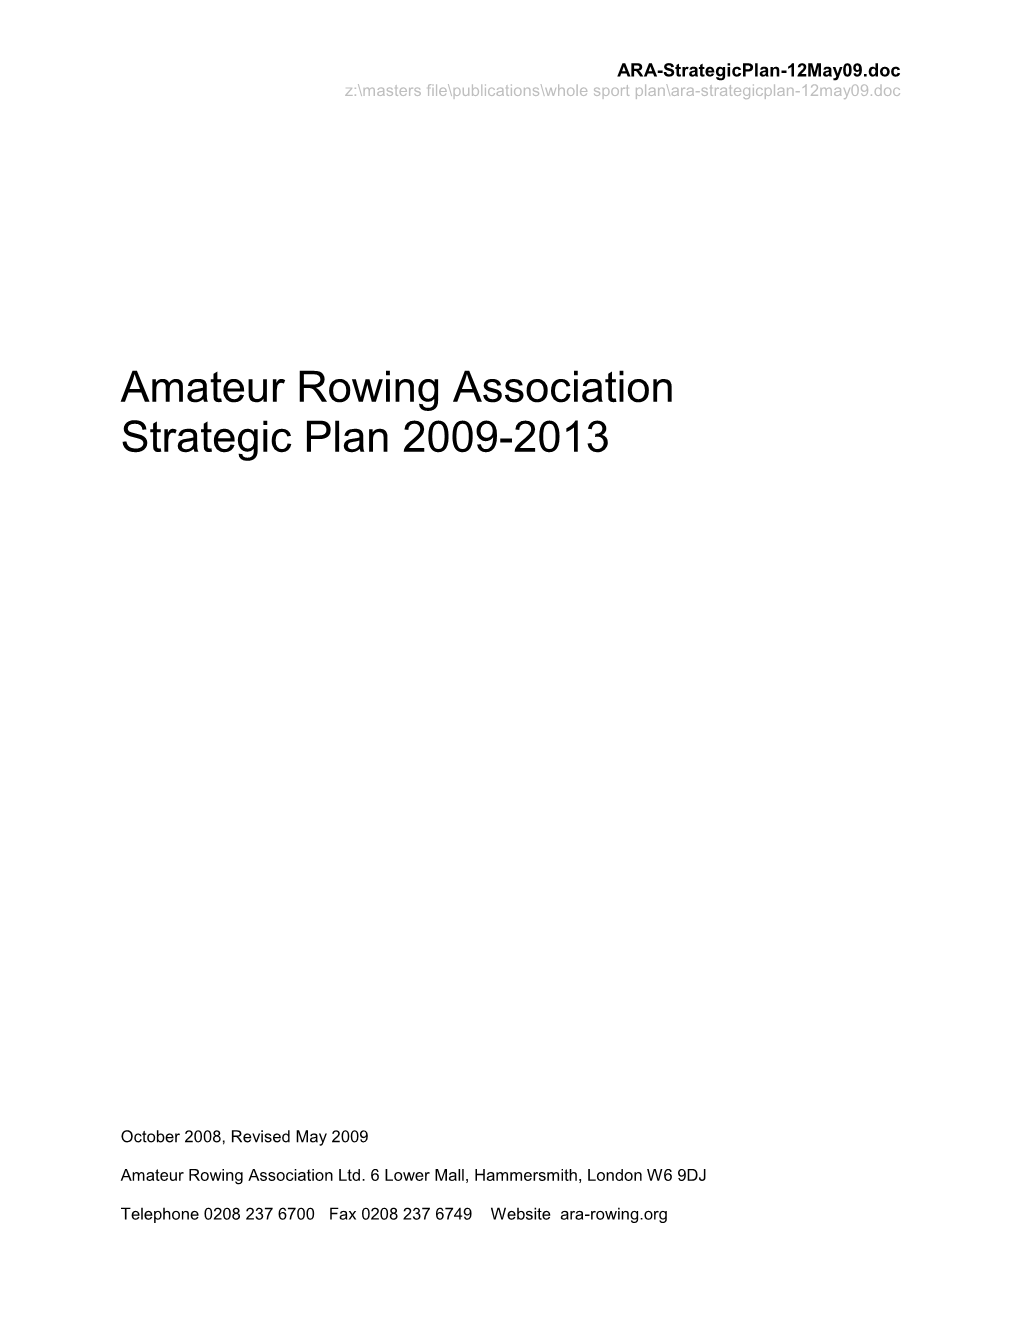 Amateur Rowing Association Strategic Plan 2009-2013